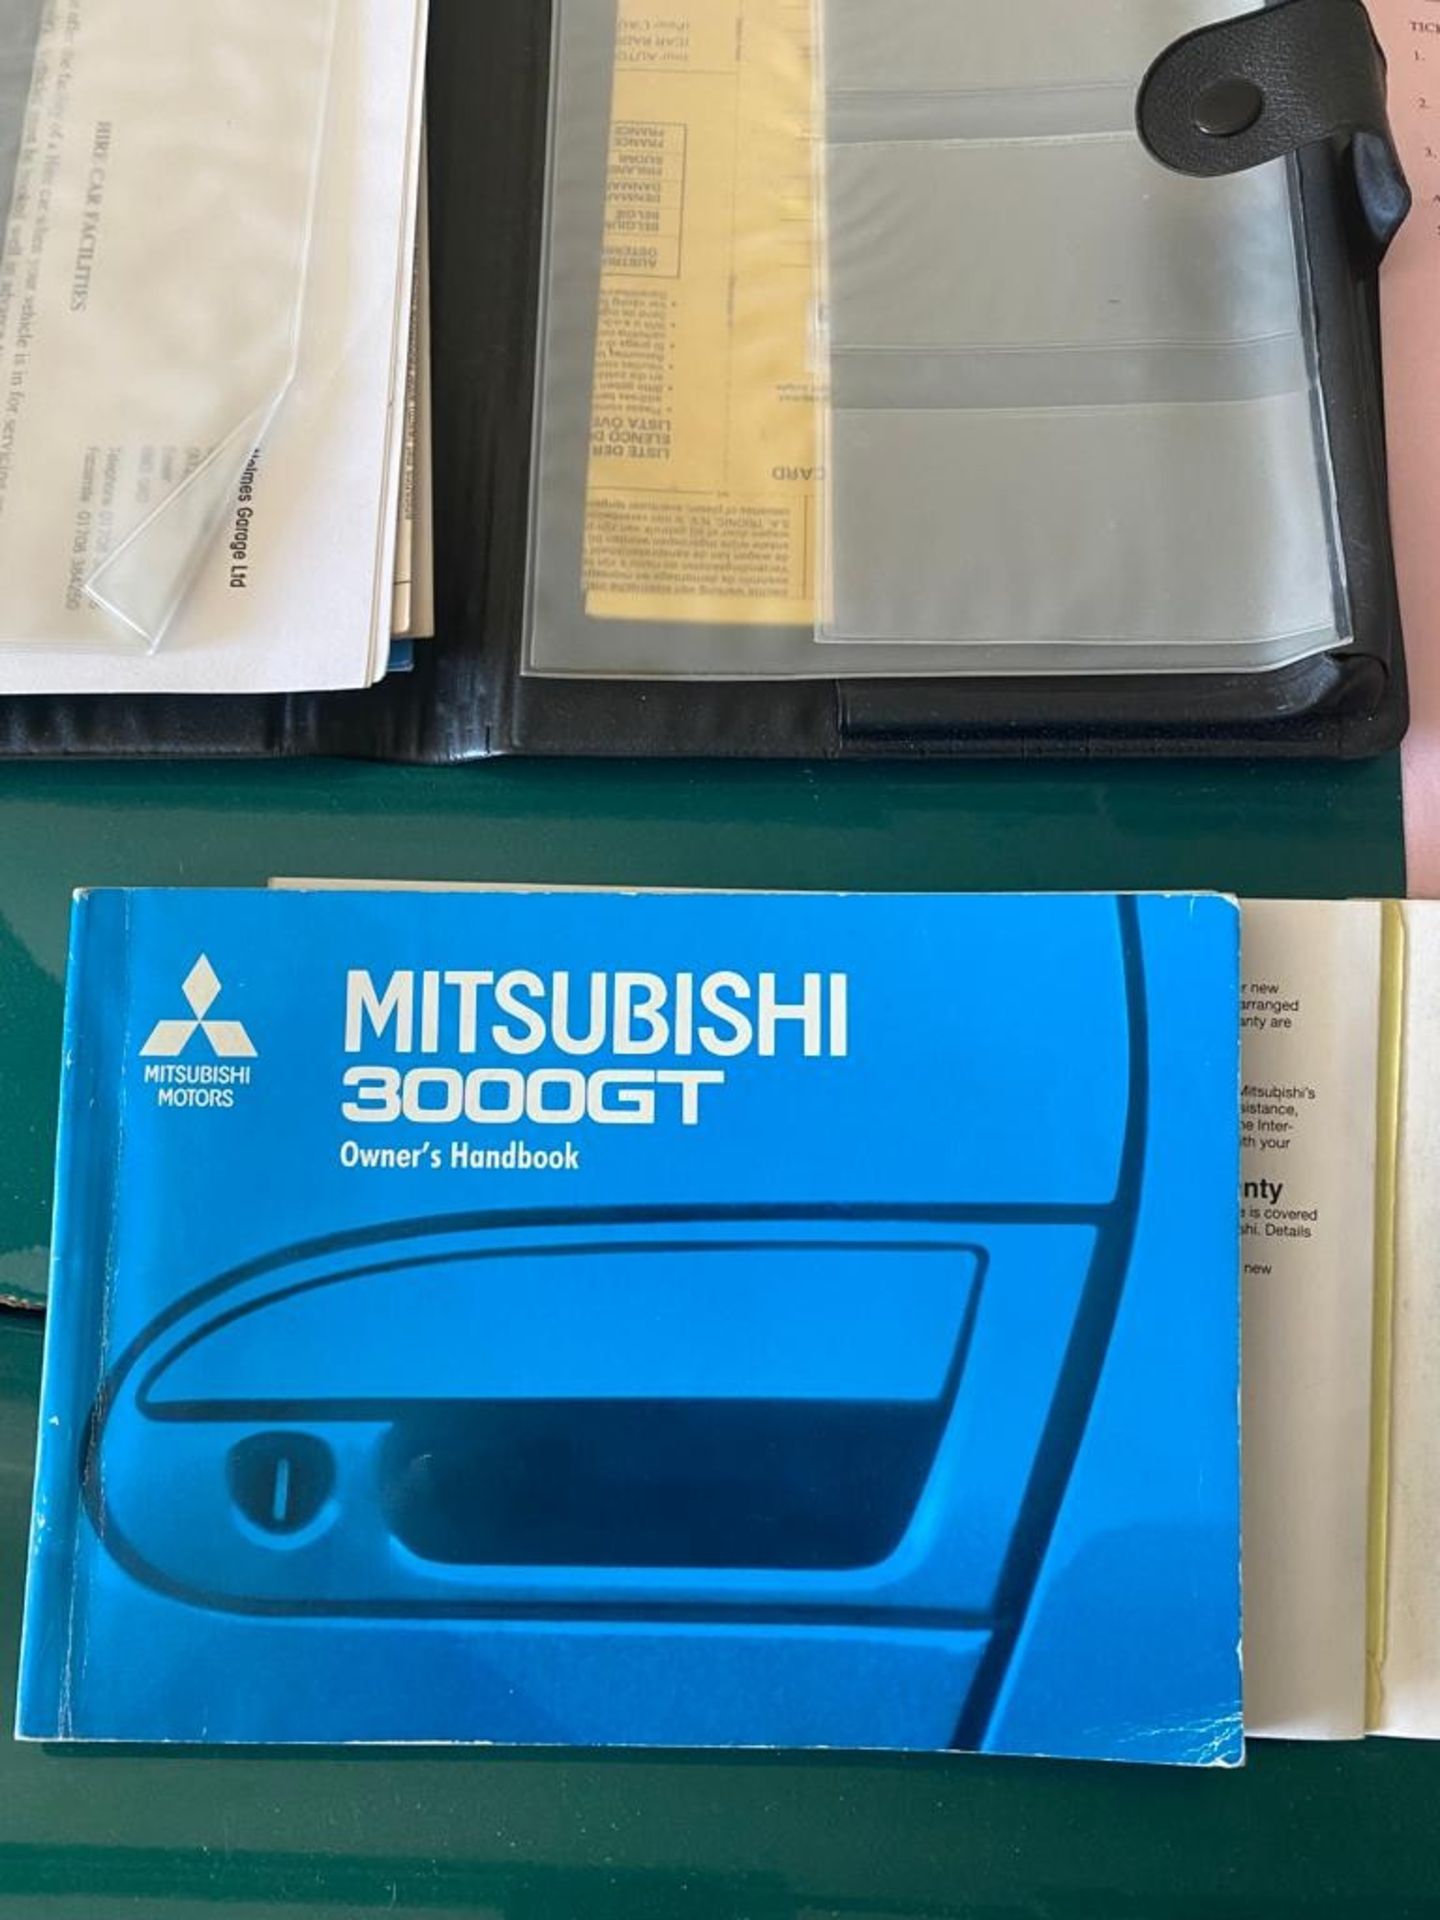 1997 MITSUBISHI 3000 GT 4WD WS Registration Number: R629 VOO Chassis Number: JMAMJZ216AVY000197 - Image 9 of 11